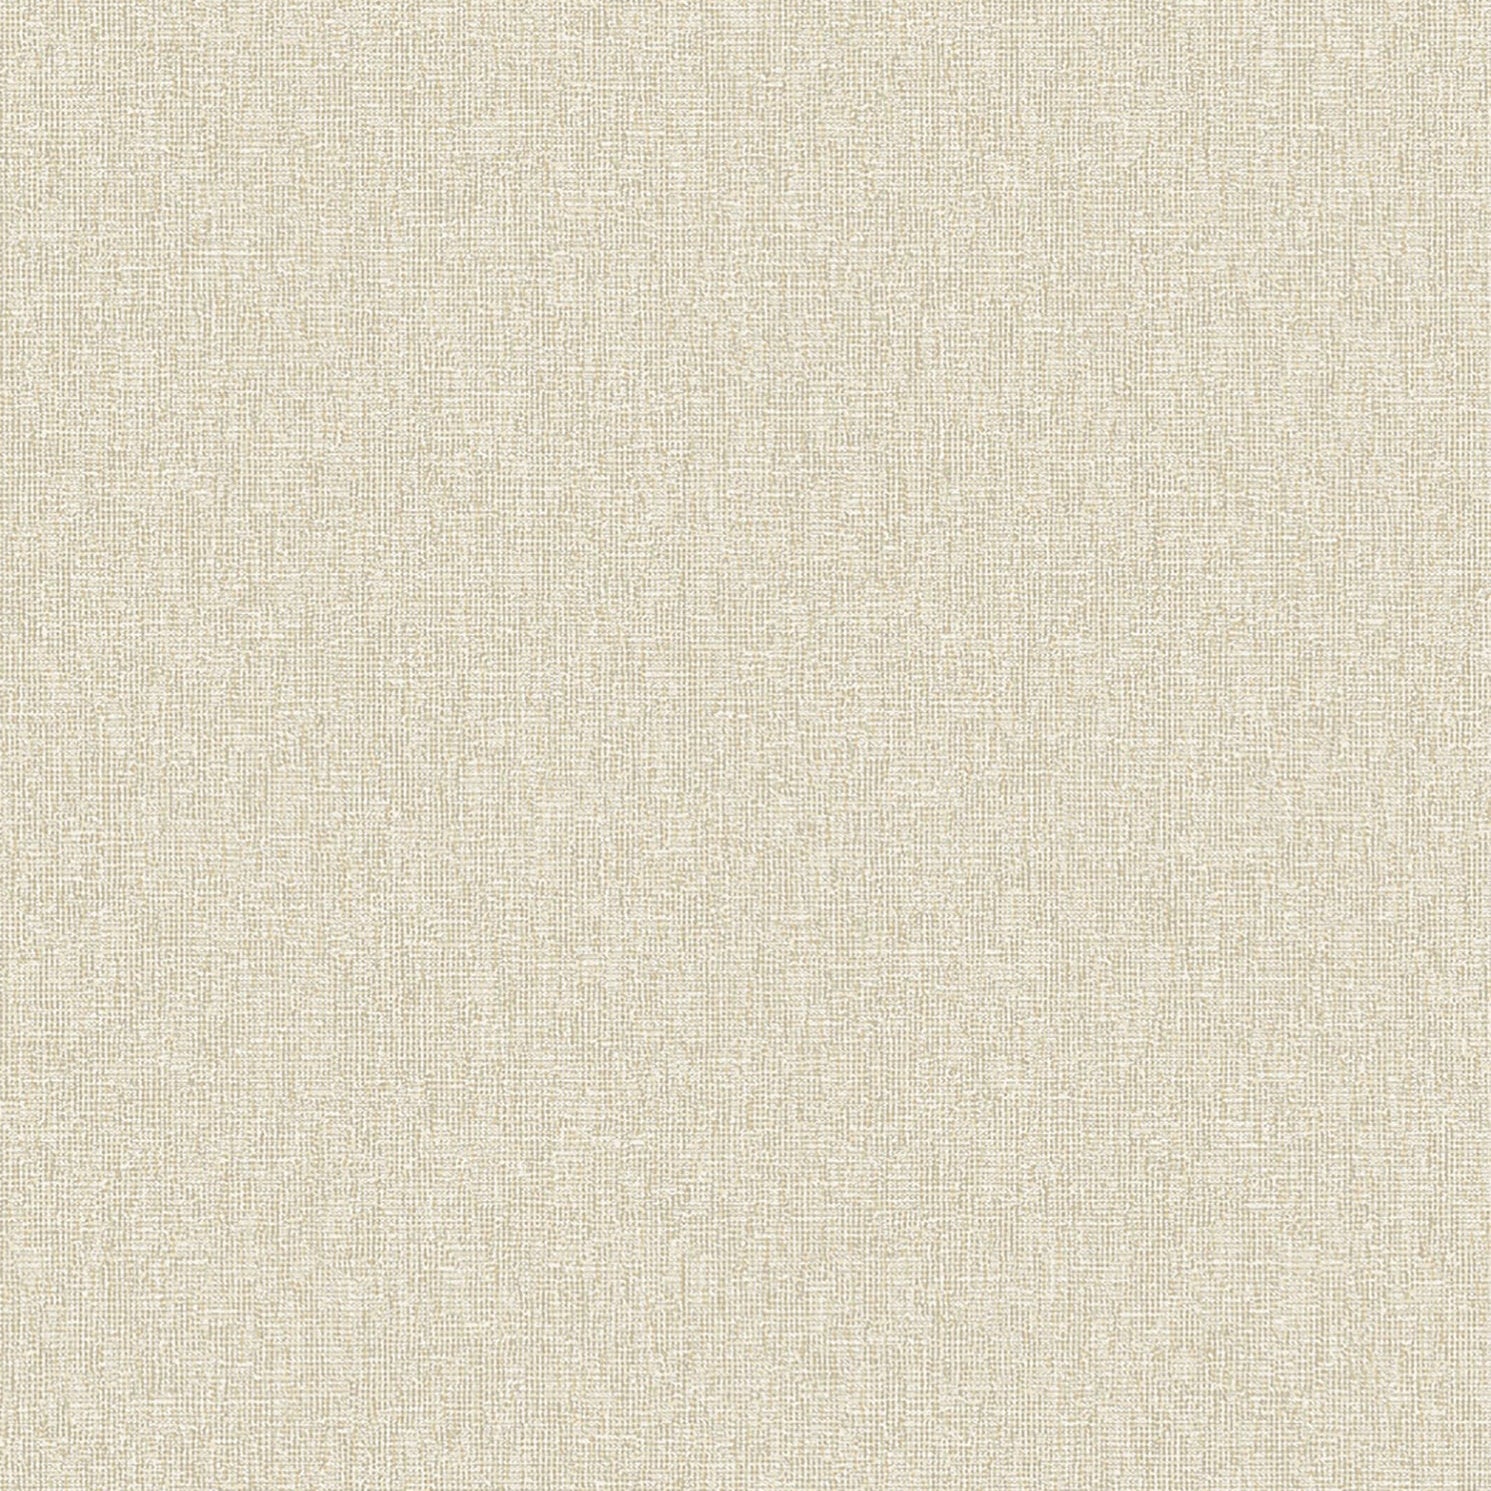 Order 2959-AWIH-2103 Textural Essentials Adalynn Wheat Texture Wheat Brewster Wallpaper